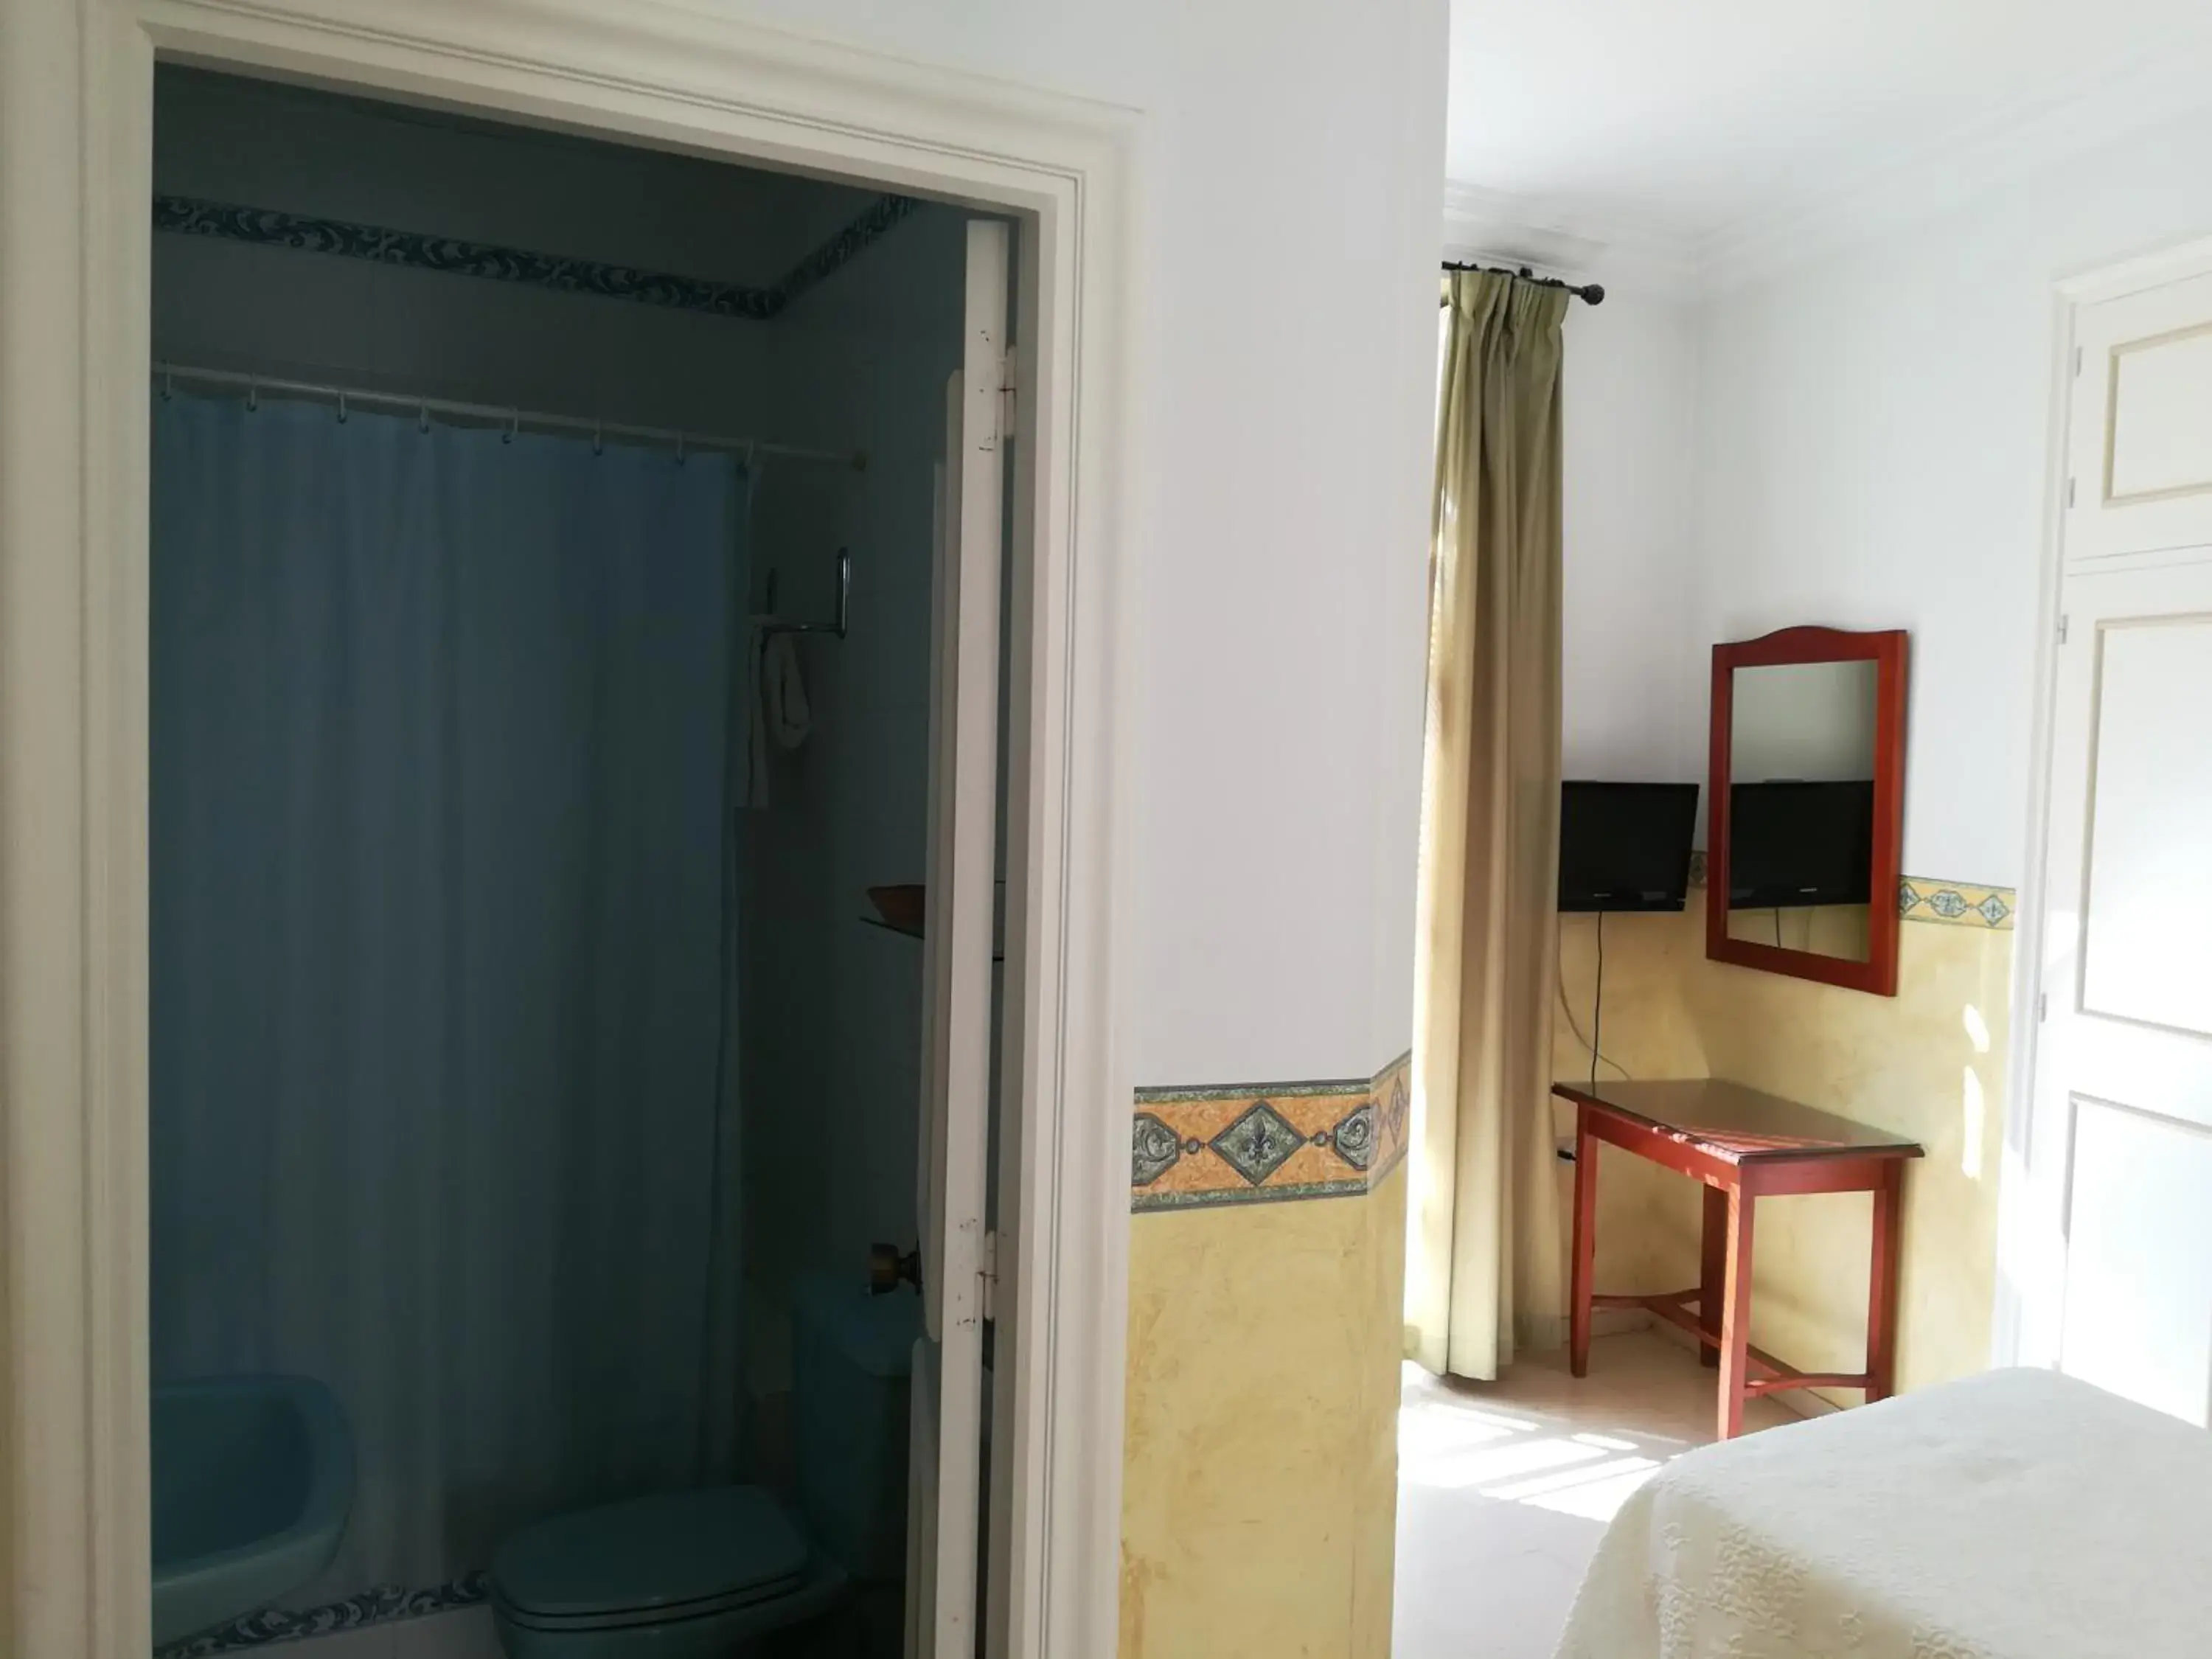 Photo of the whole room, Bathroom in Nuevo Hotel